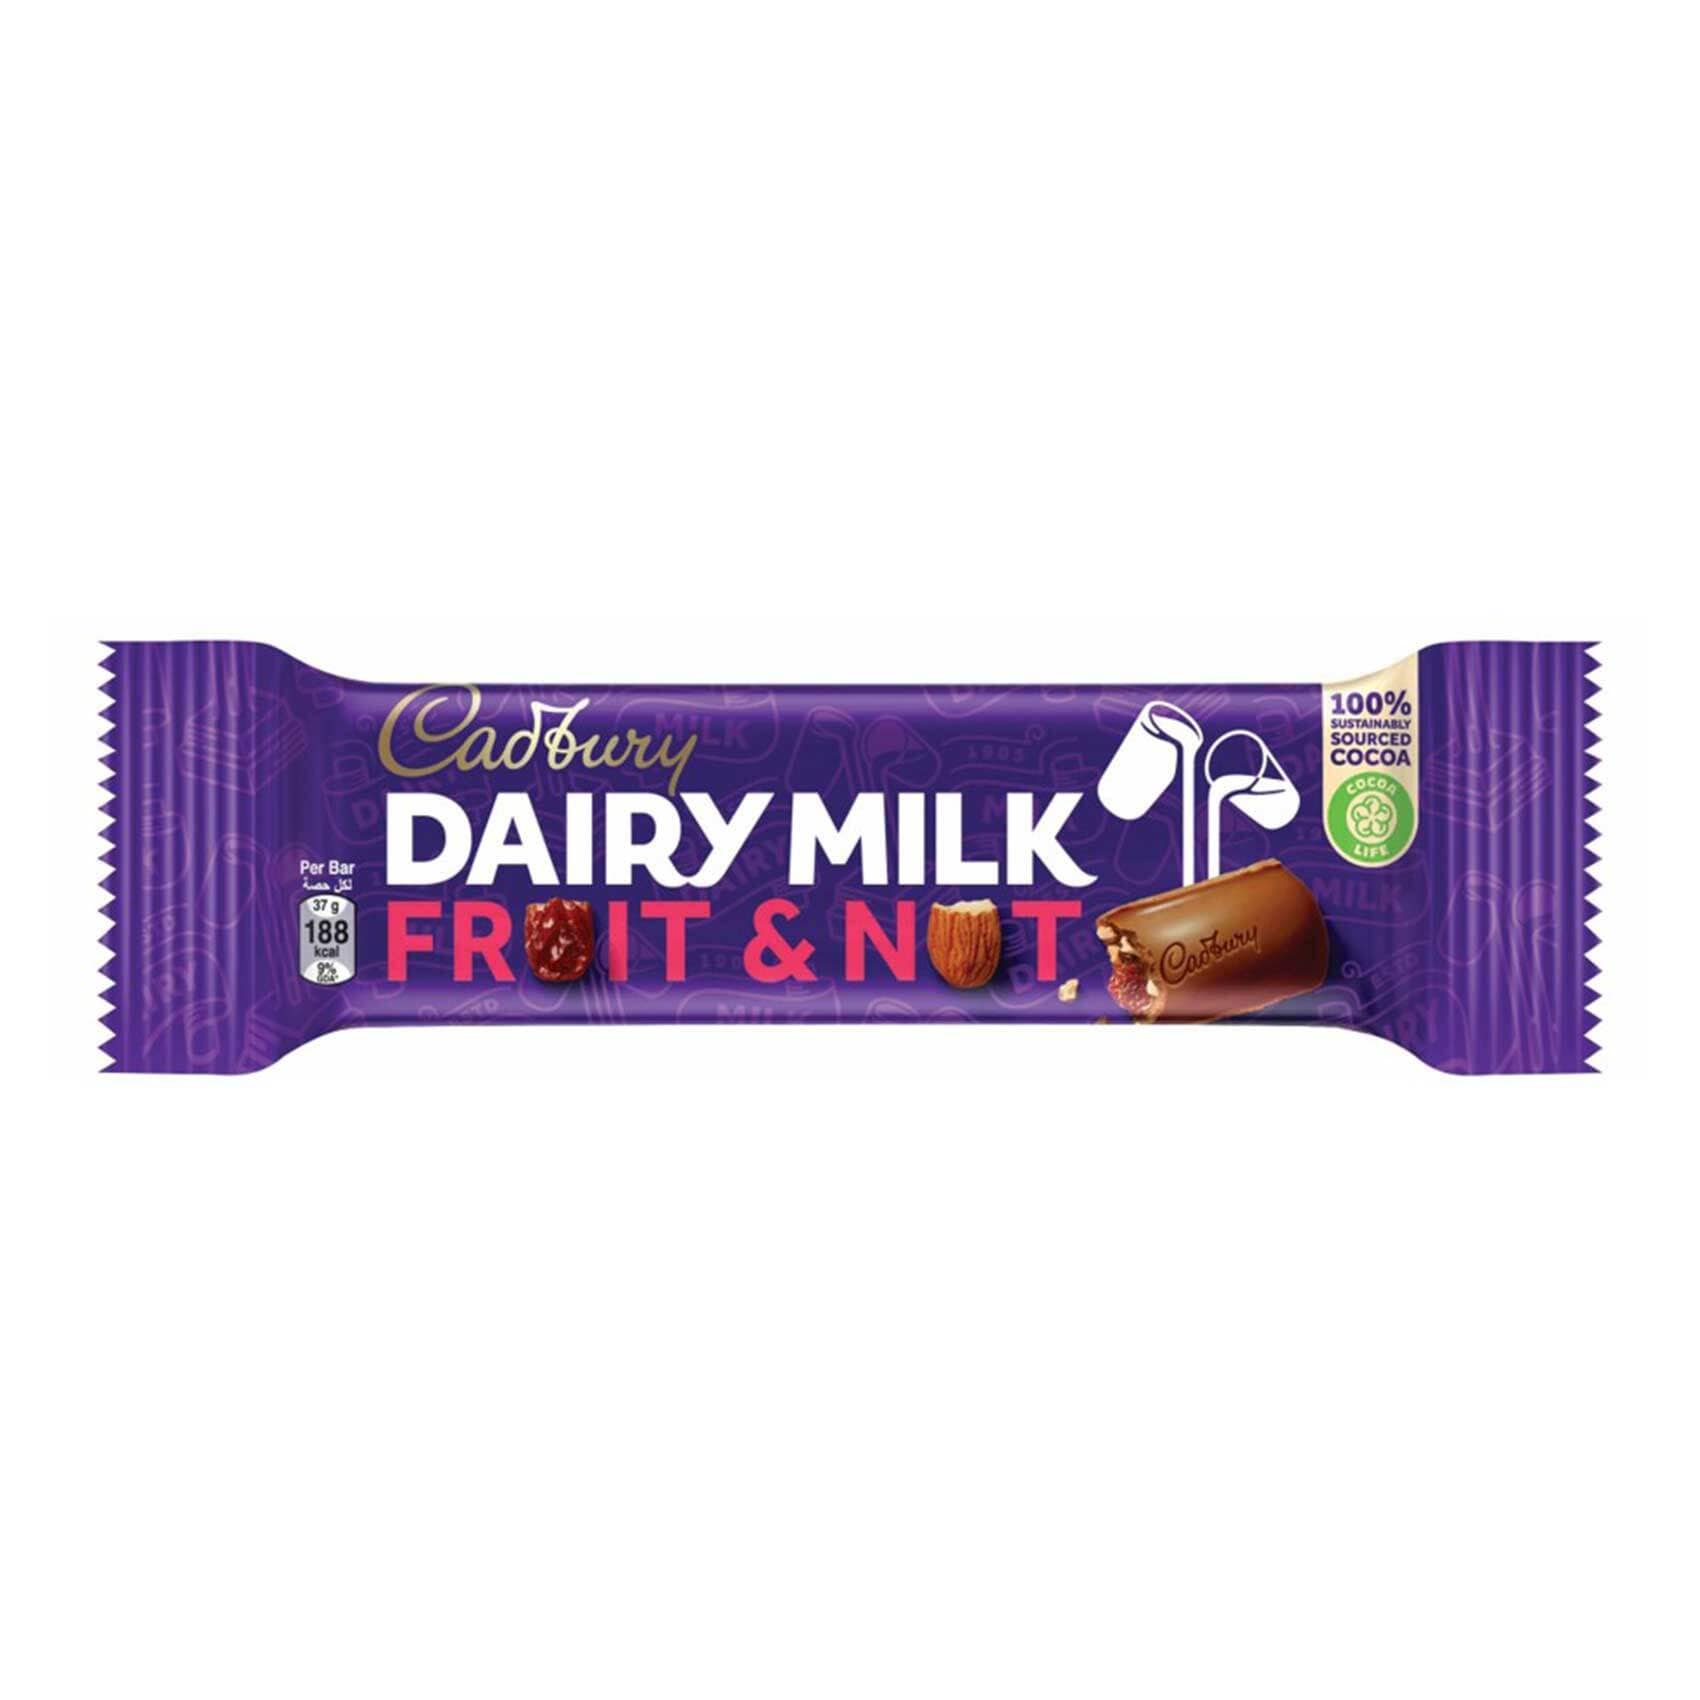 Buy Cadbury Flake Dipped Bar - 32 gram Online - Shop Food Cupboard on  Carrefour Egypt